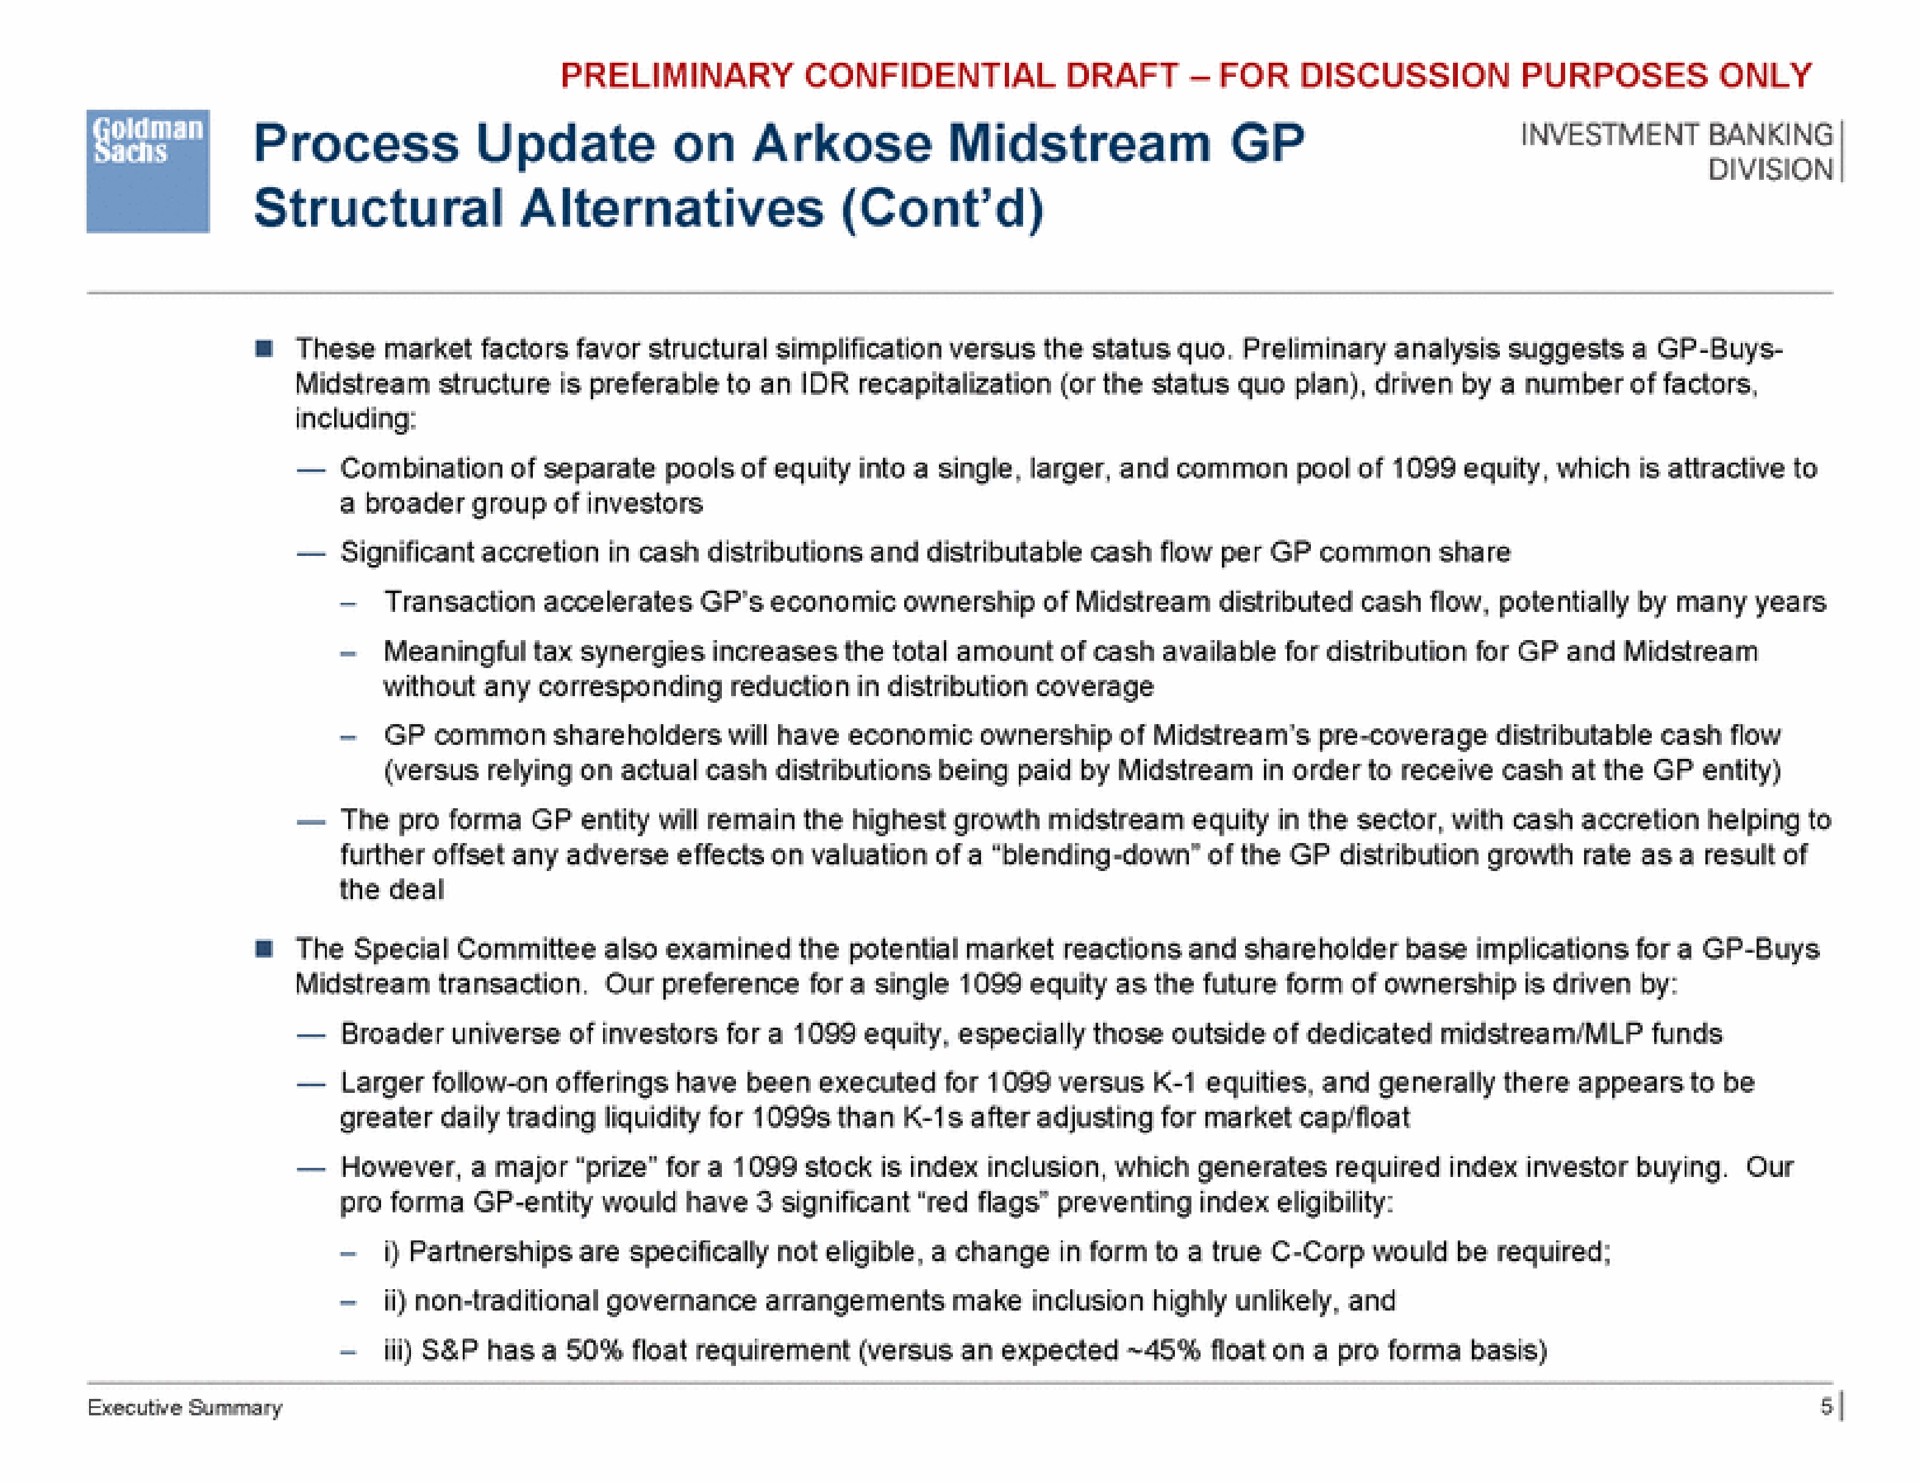 process update on arkose midstream soe structural alternatives | Goldman Sachs